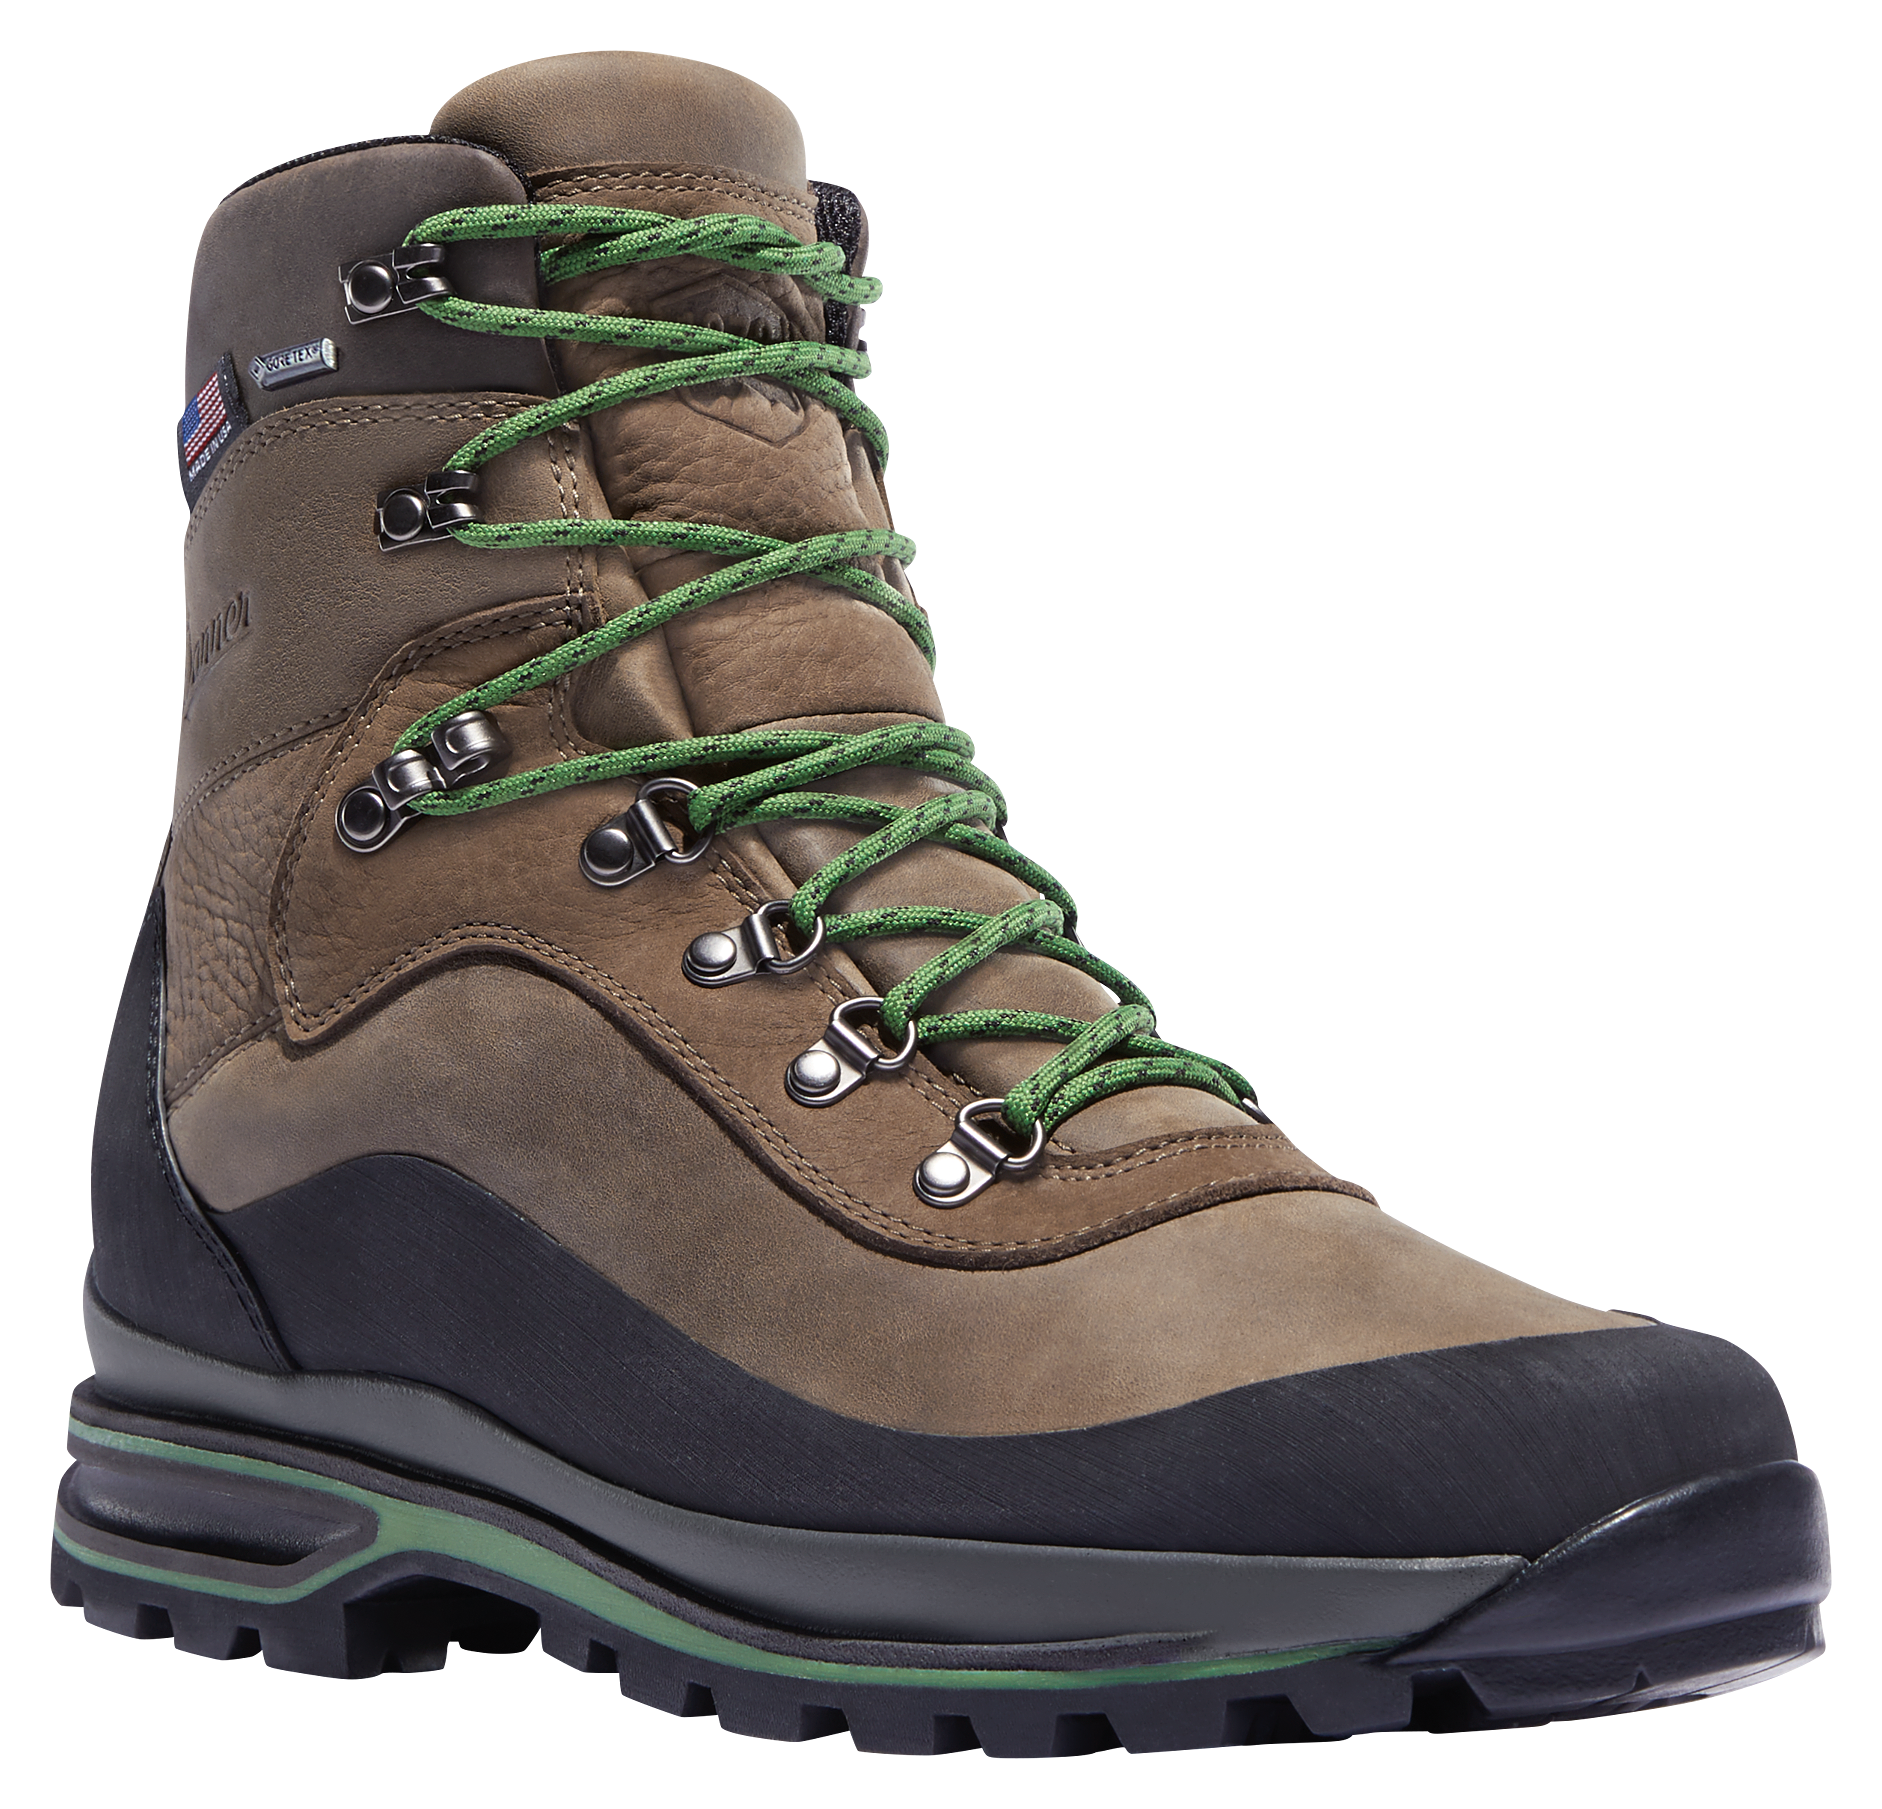 Danner Crag Rat USA GORE-TEX Hiking Boots for Men